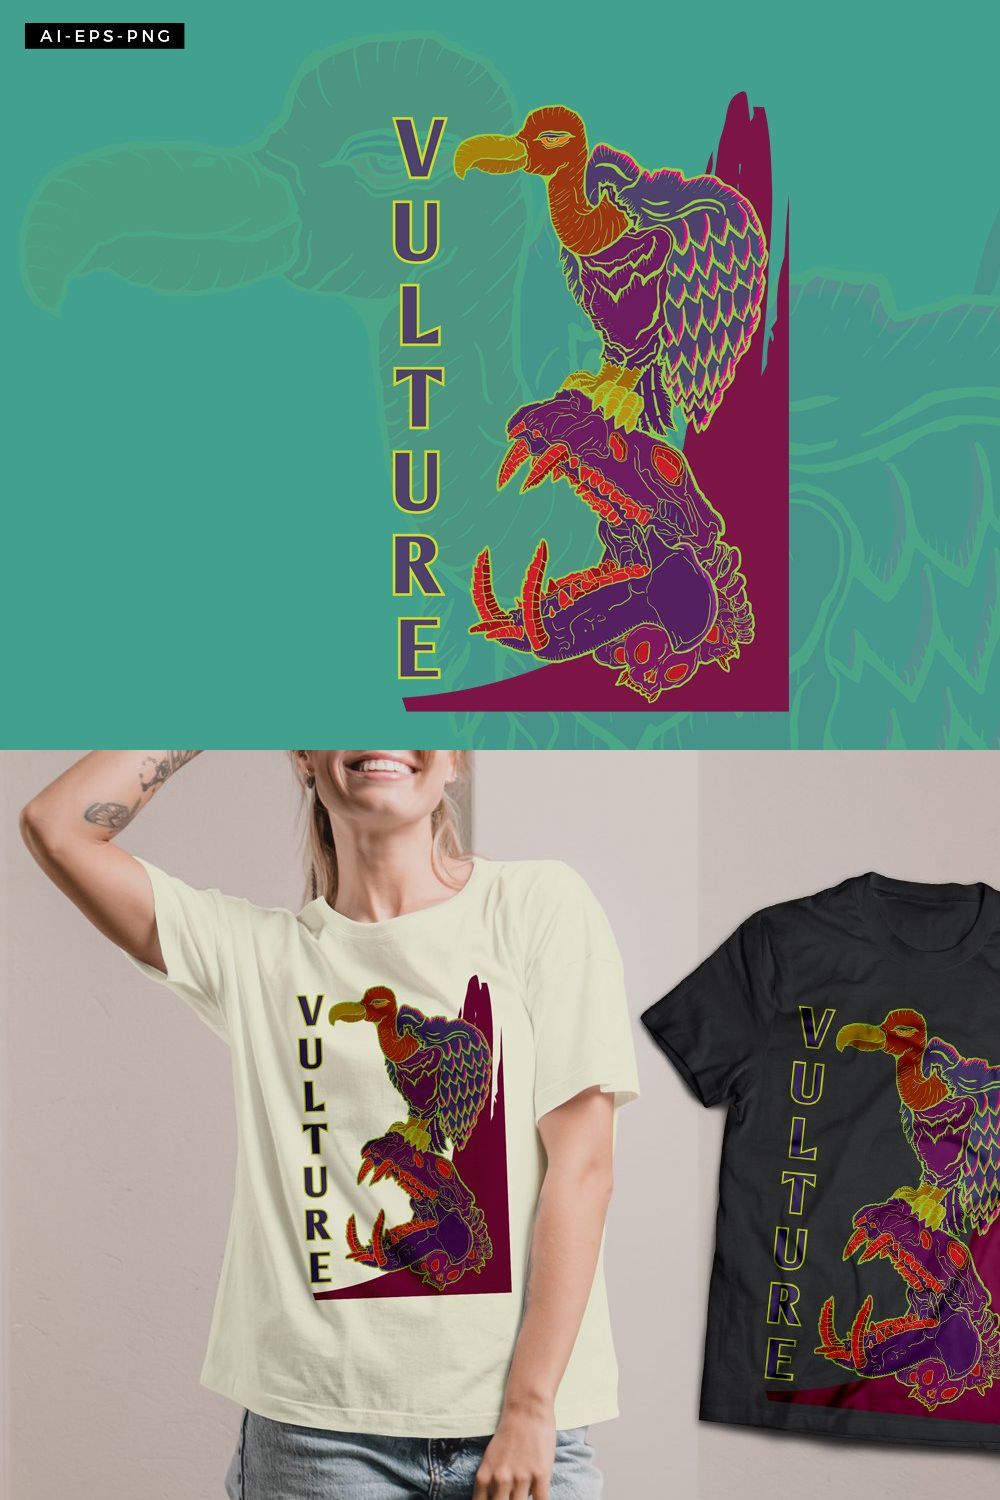 Vulture Skull Age T-Shirt pinterest preview image.